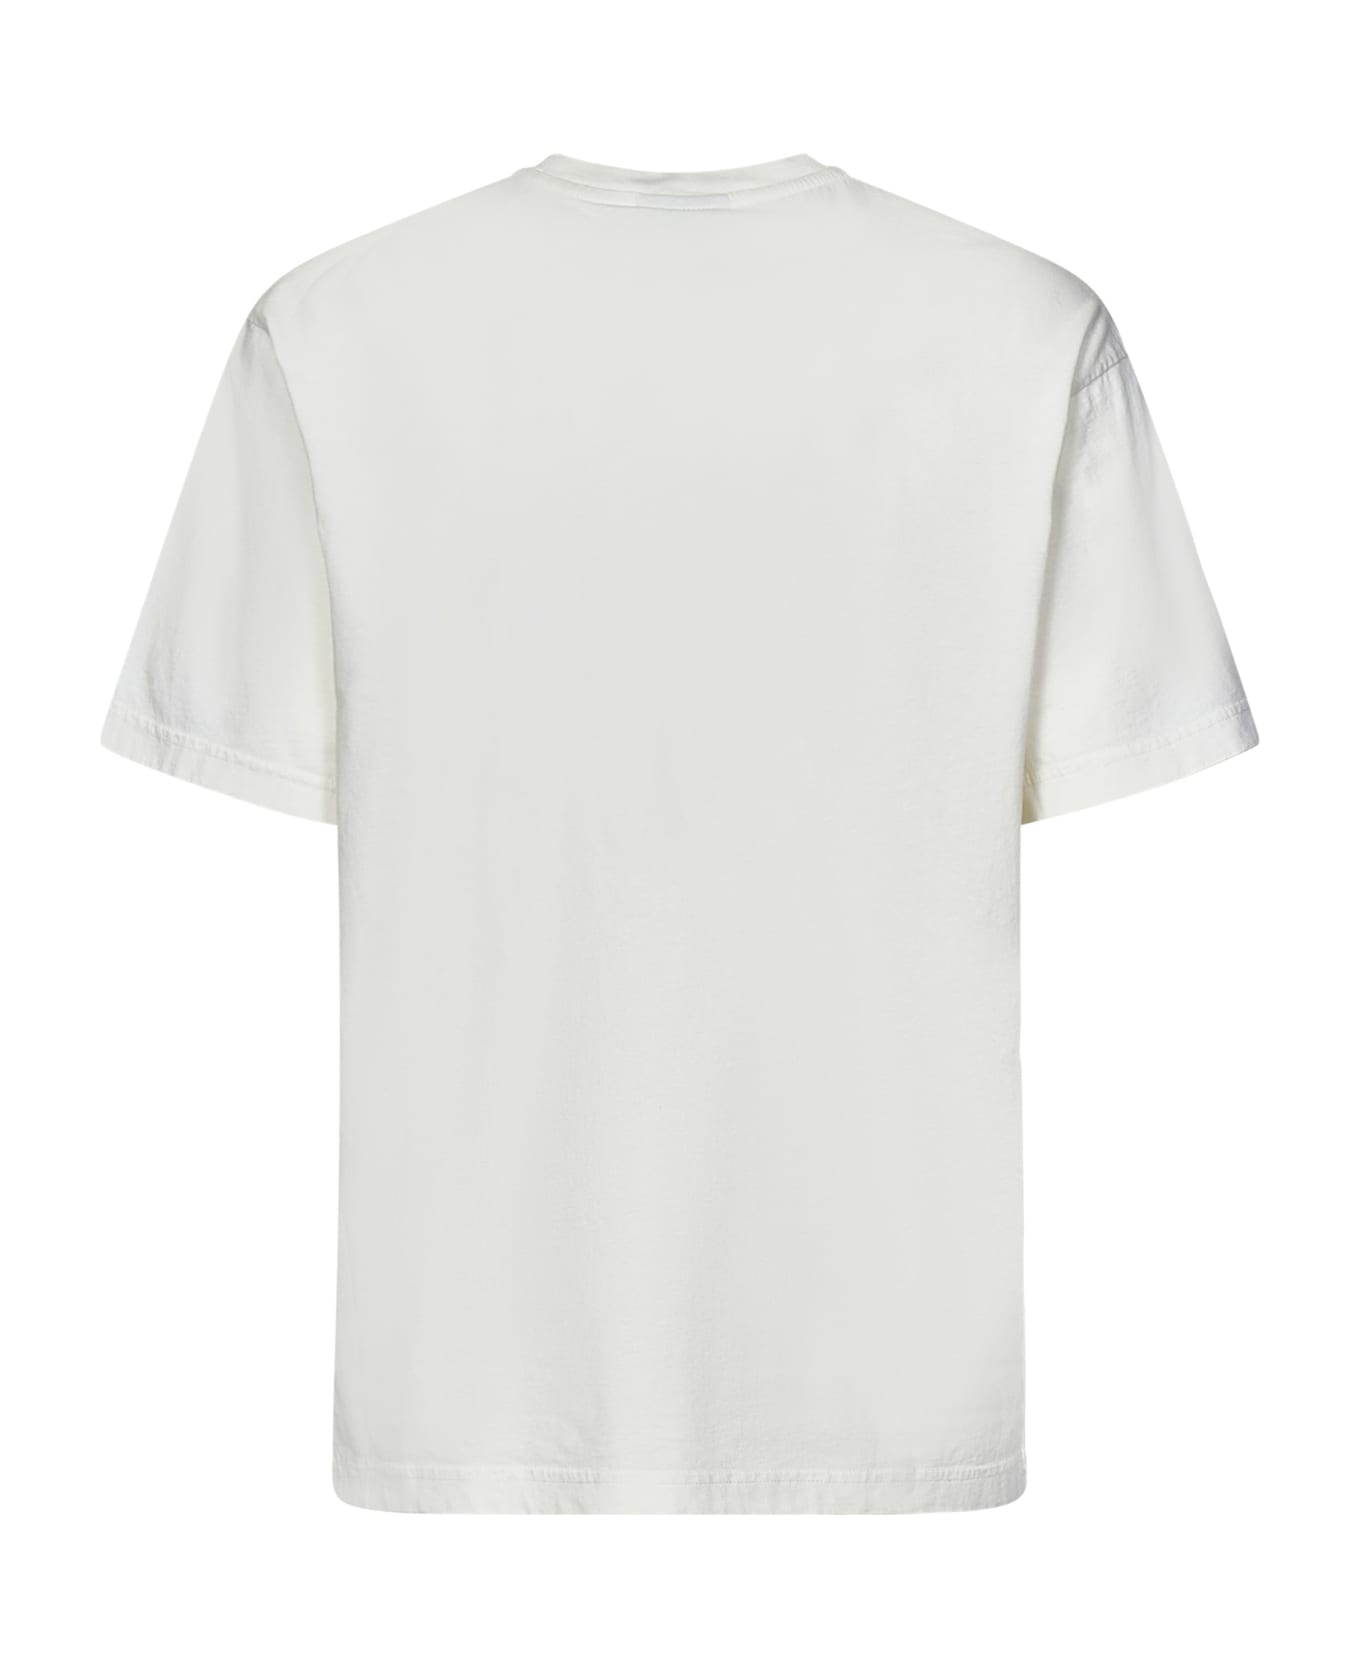 Bluemarble T-shirt - White